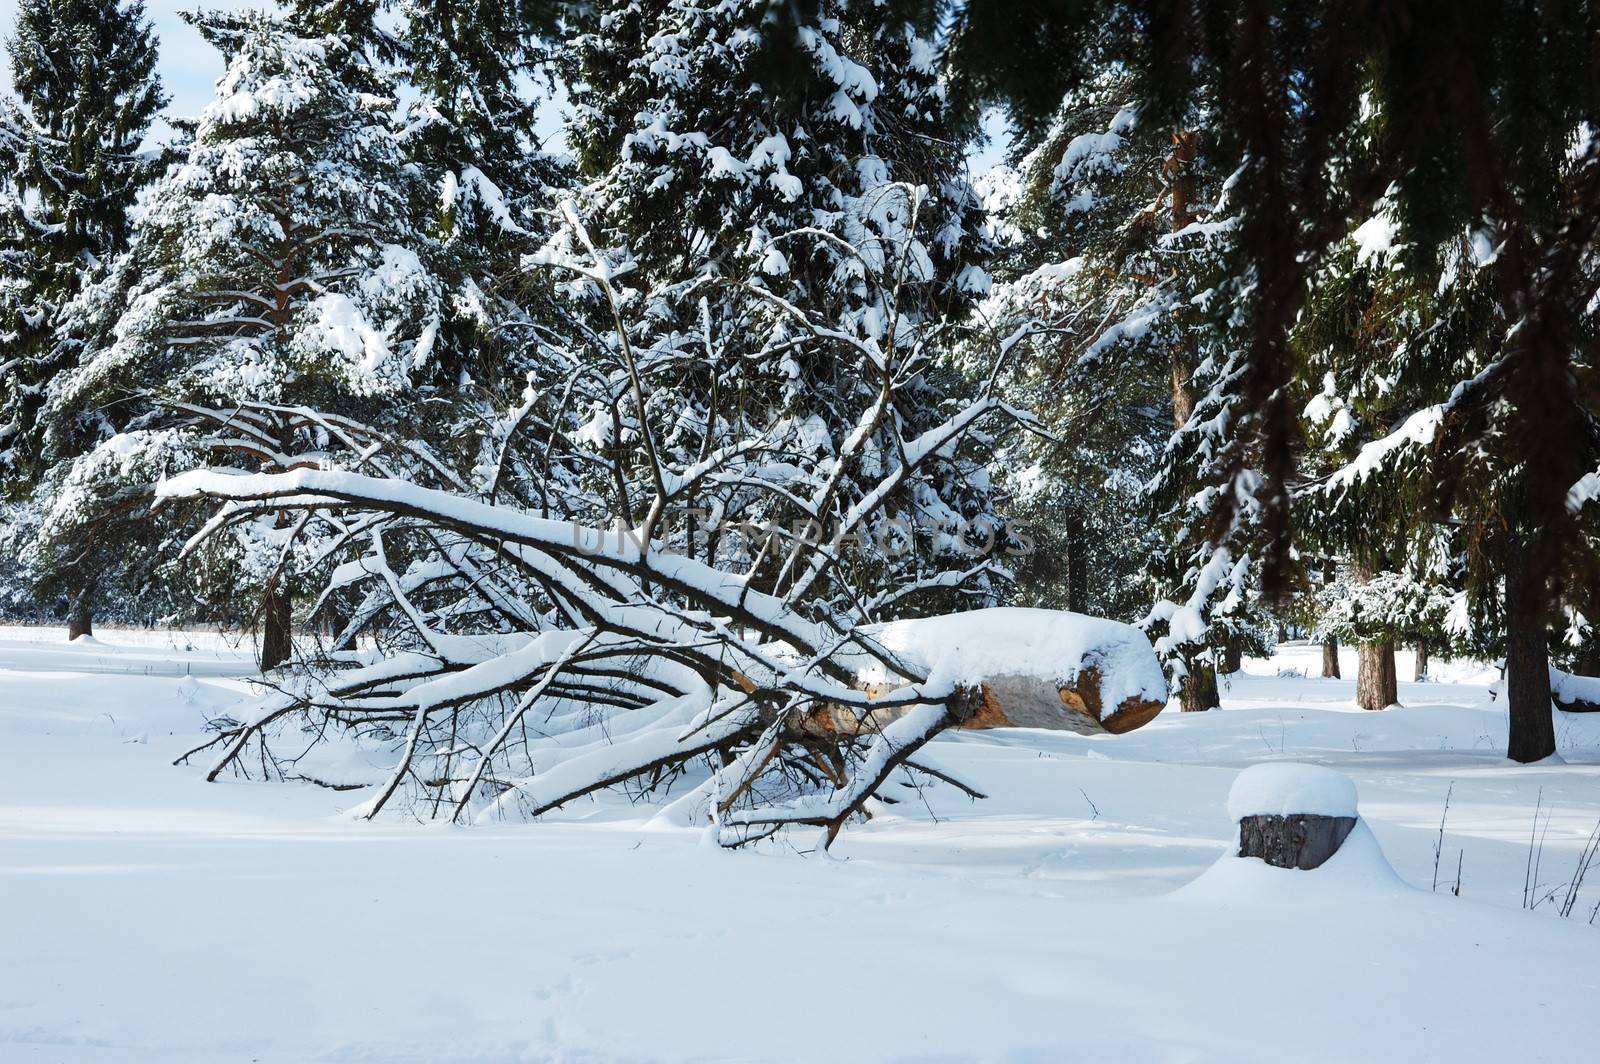 Sawed tree under snow in winter forest by wander